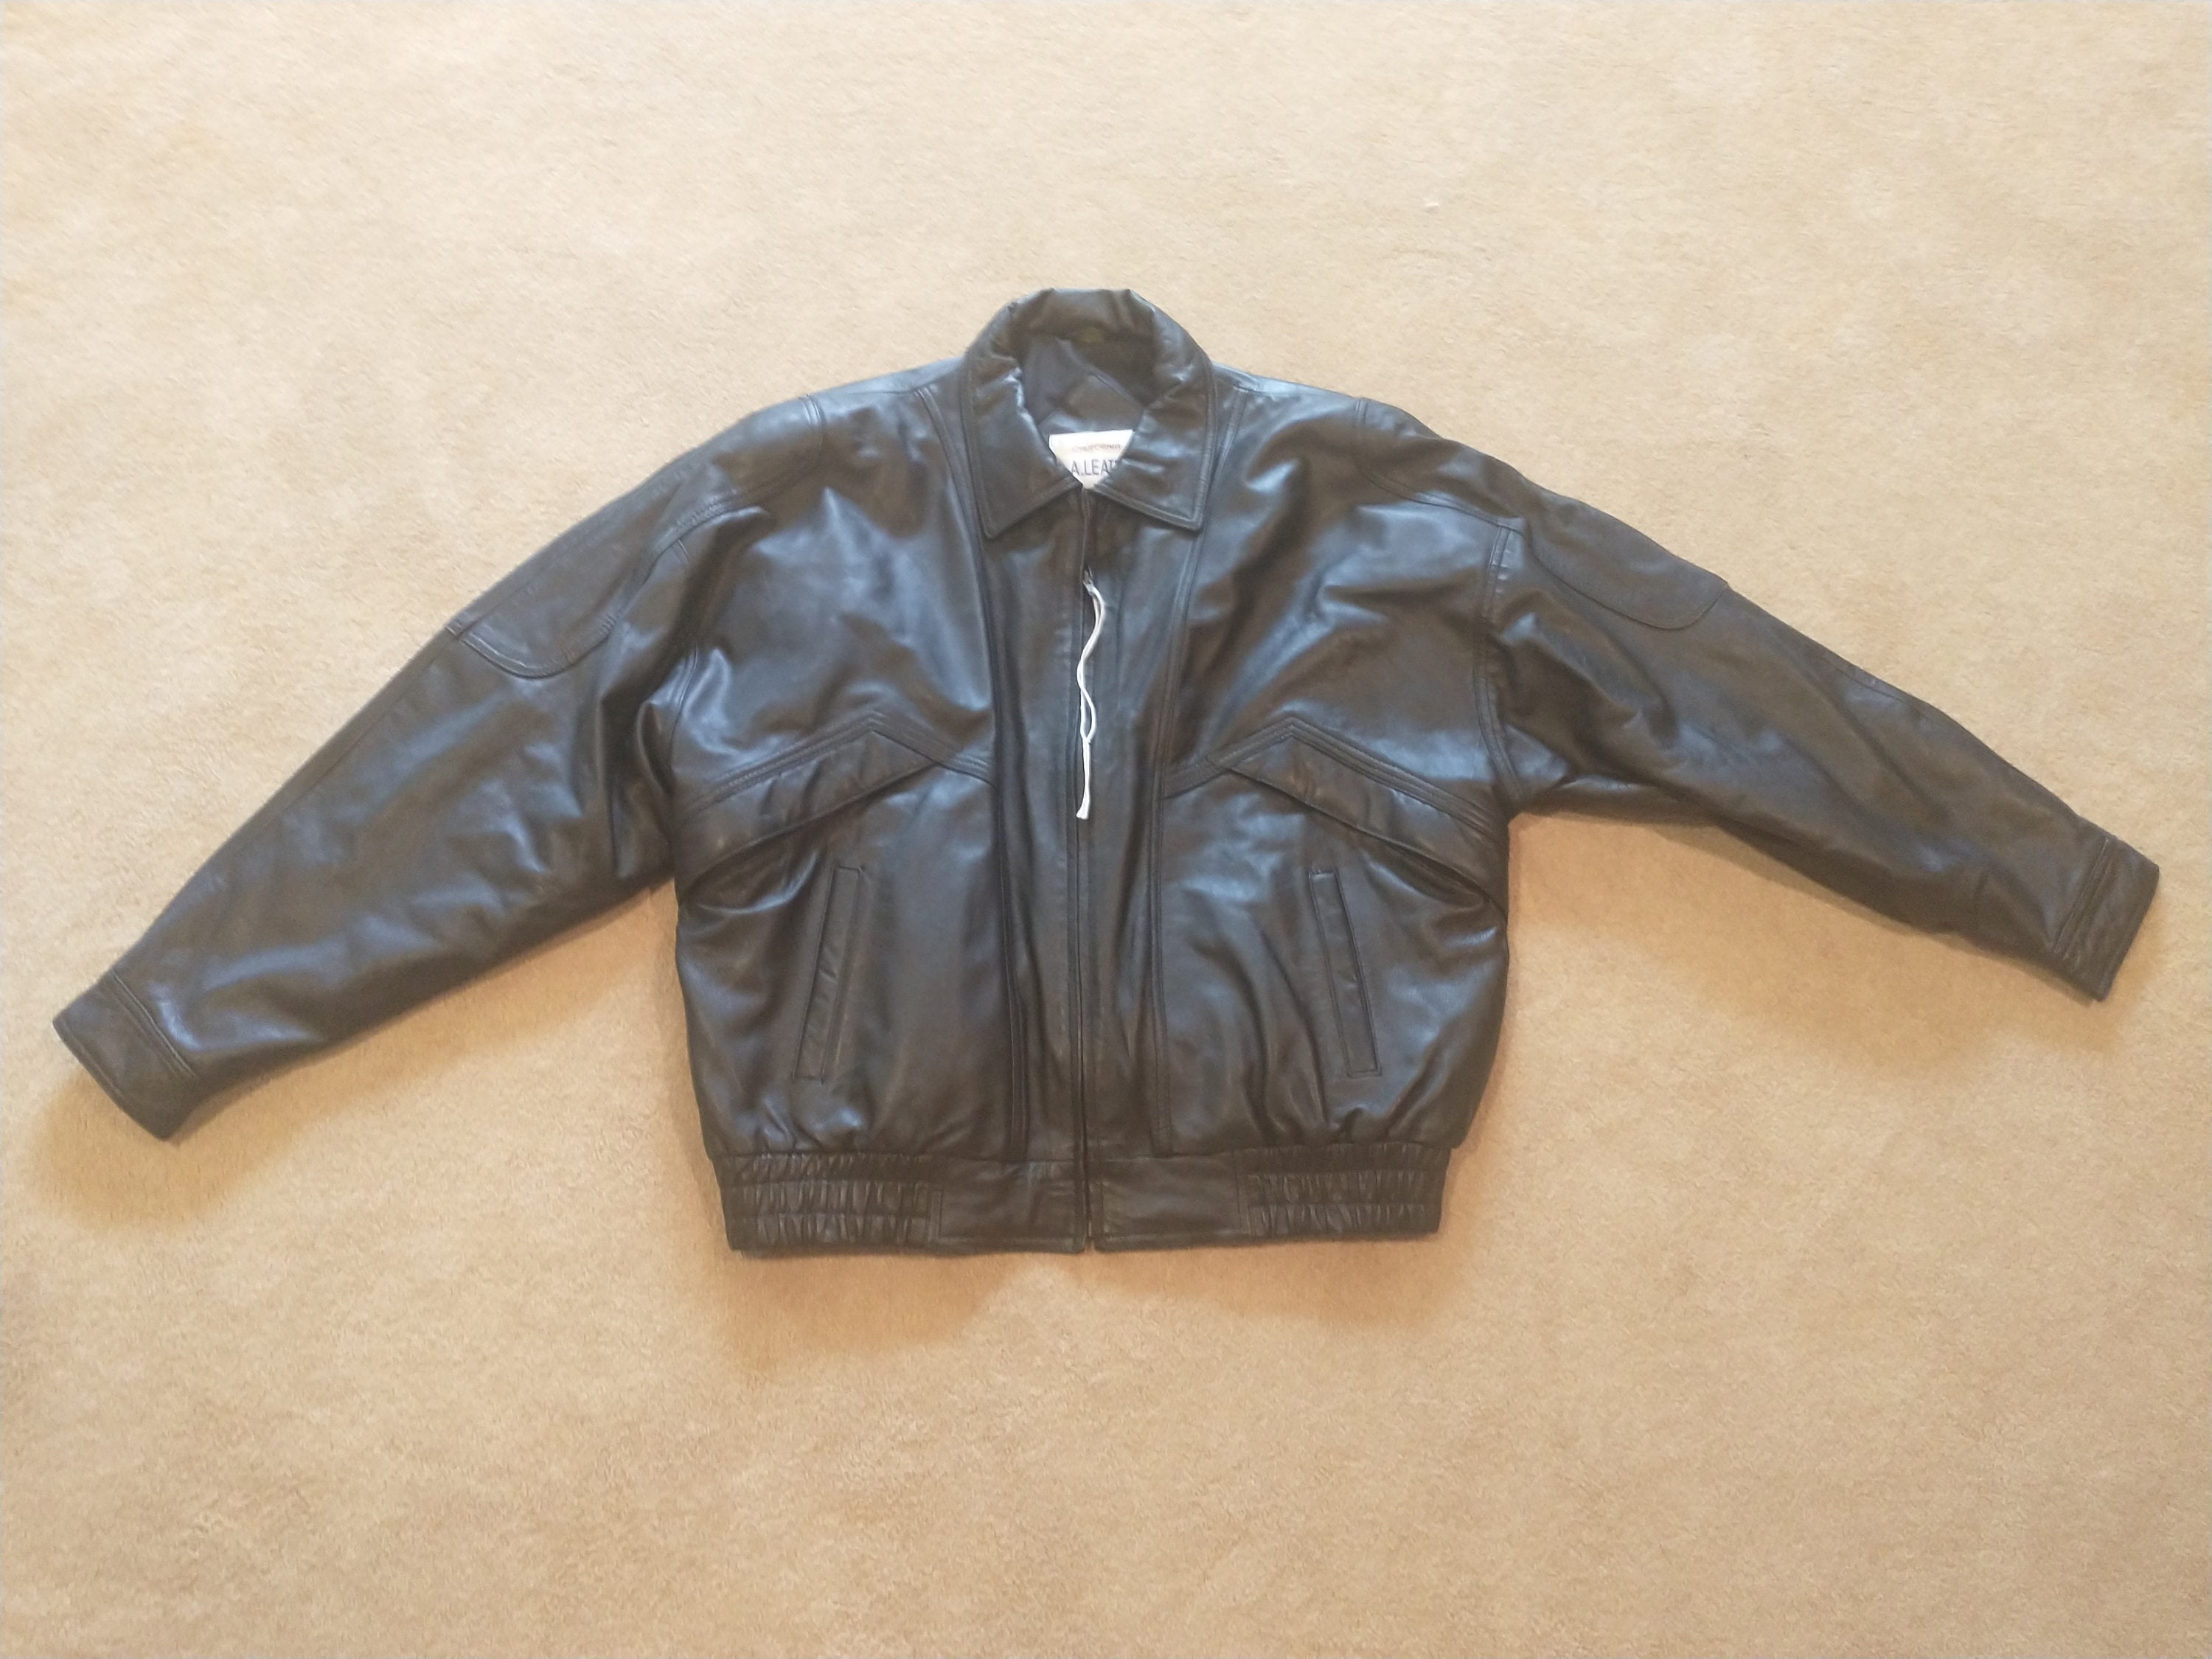 La Dodgers Leather Jacket - RockStar Jacket